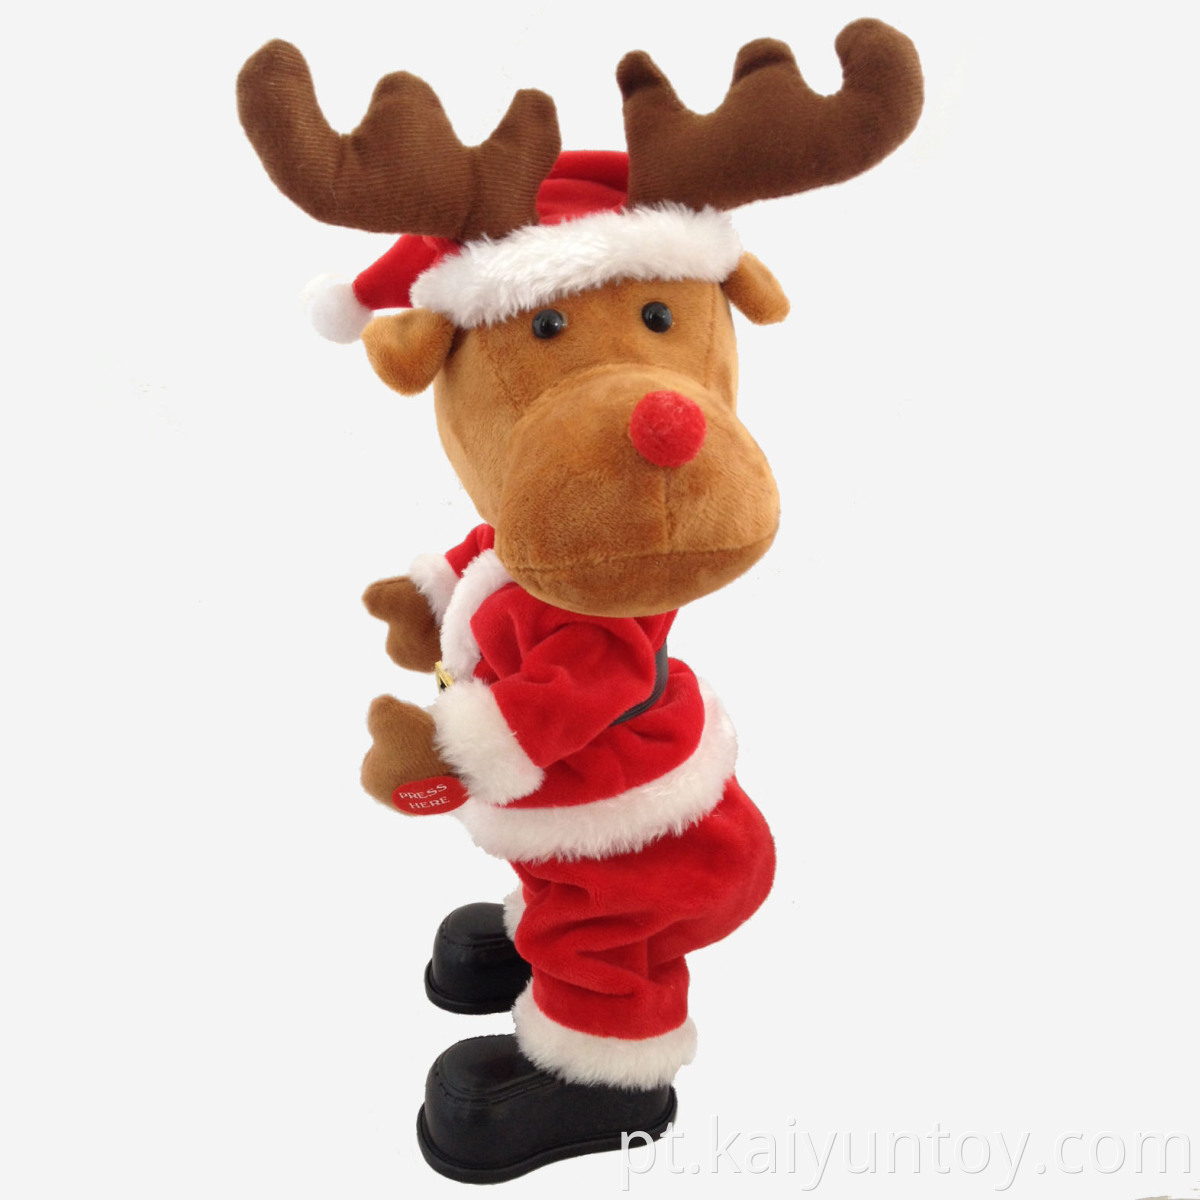 Twerking Reindeer Xmas Decoration Funny Toy